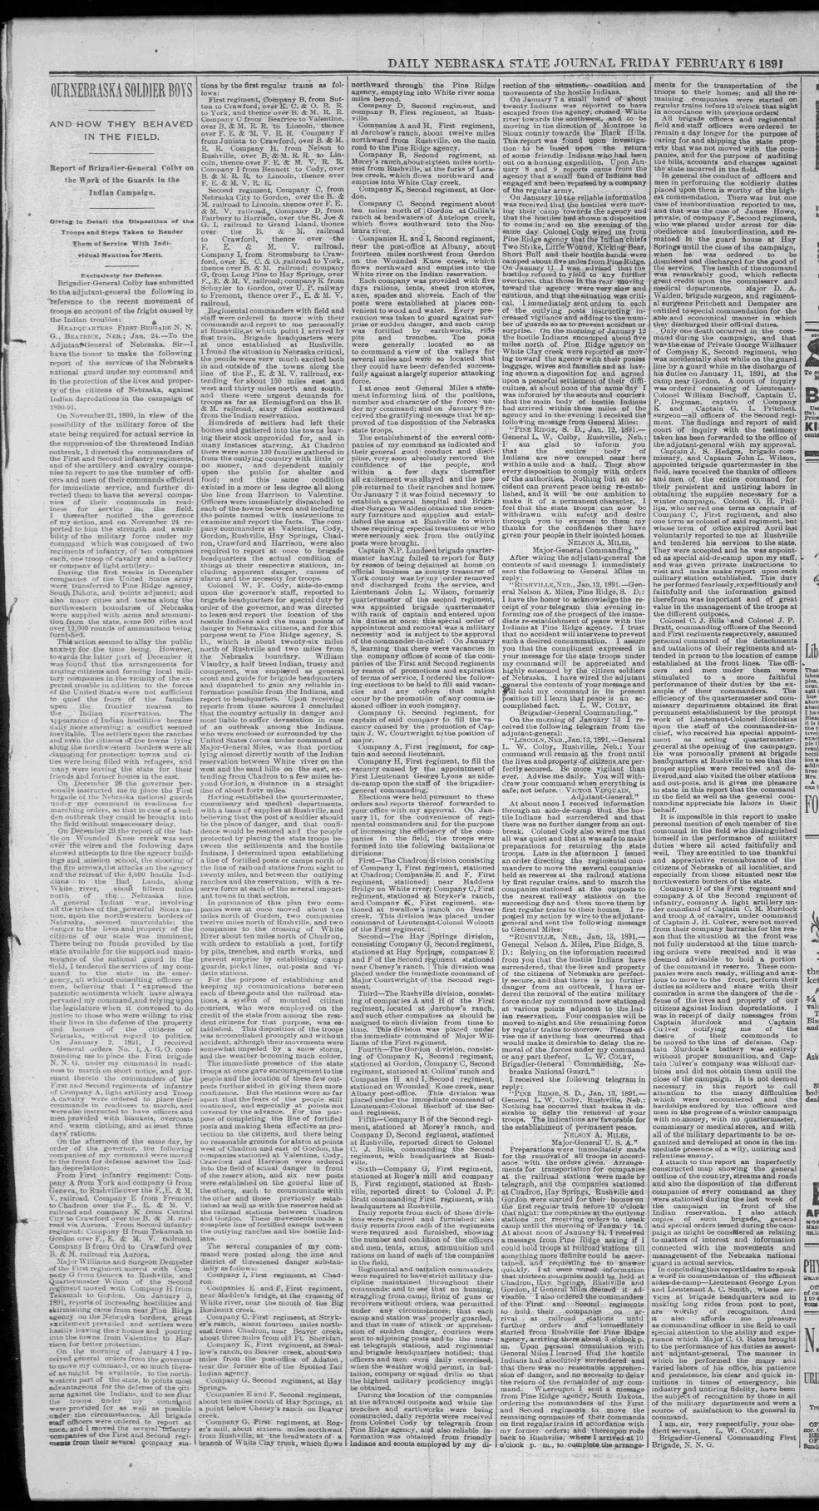 The Nebraska State Journal (Lincoln, Nebraska)06 Feb 1891, FriPage 11